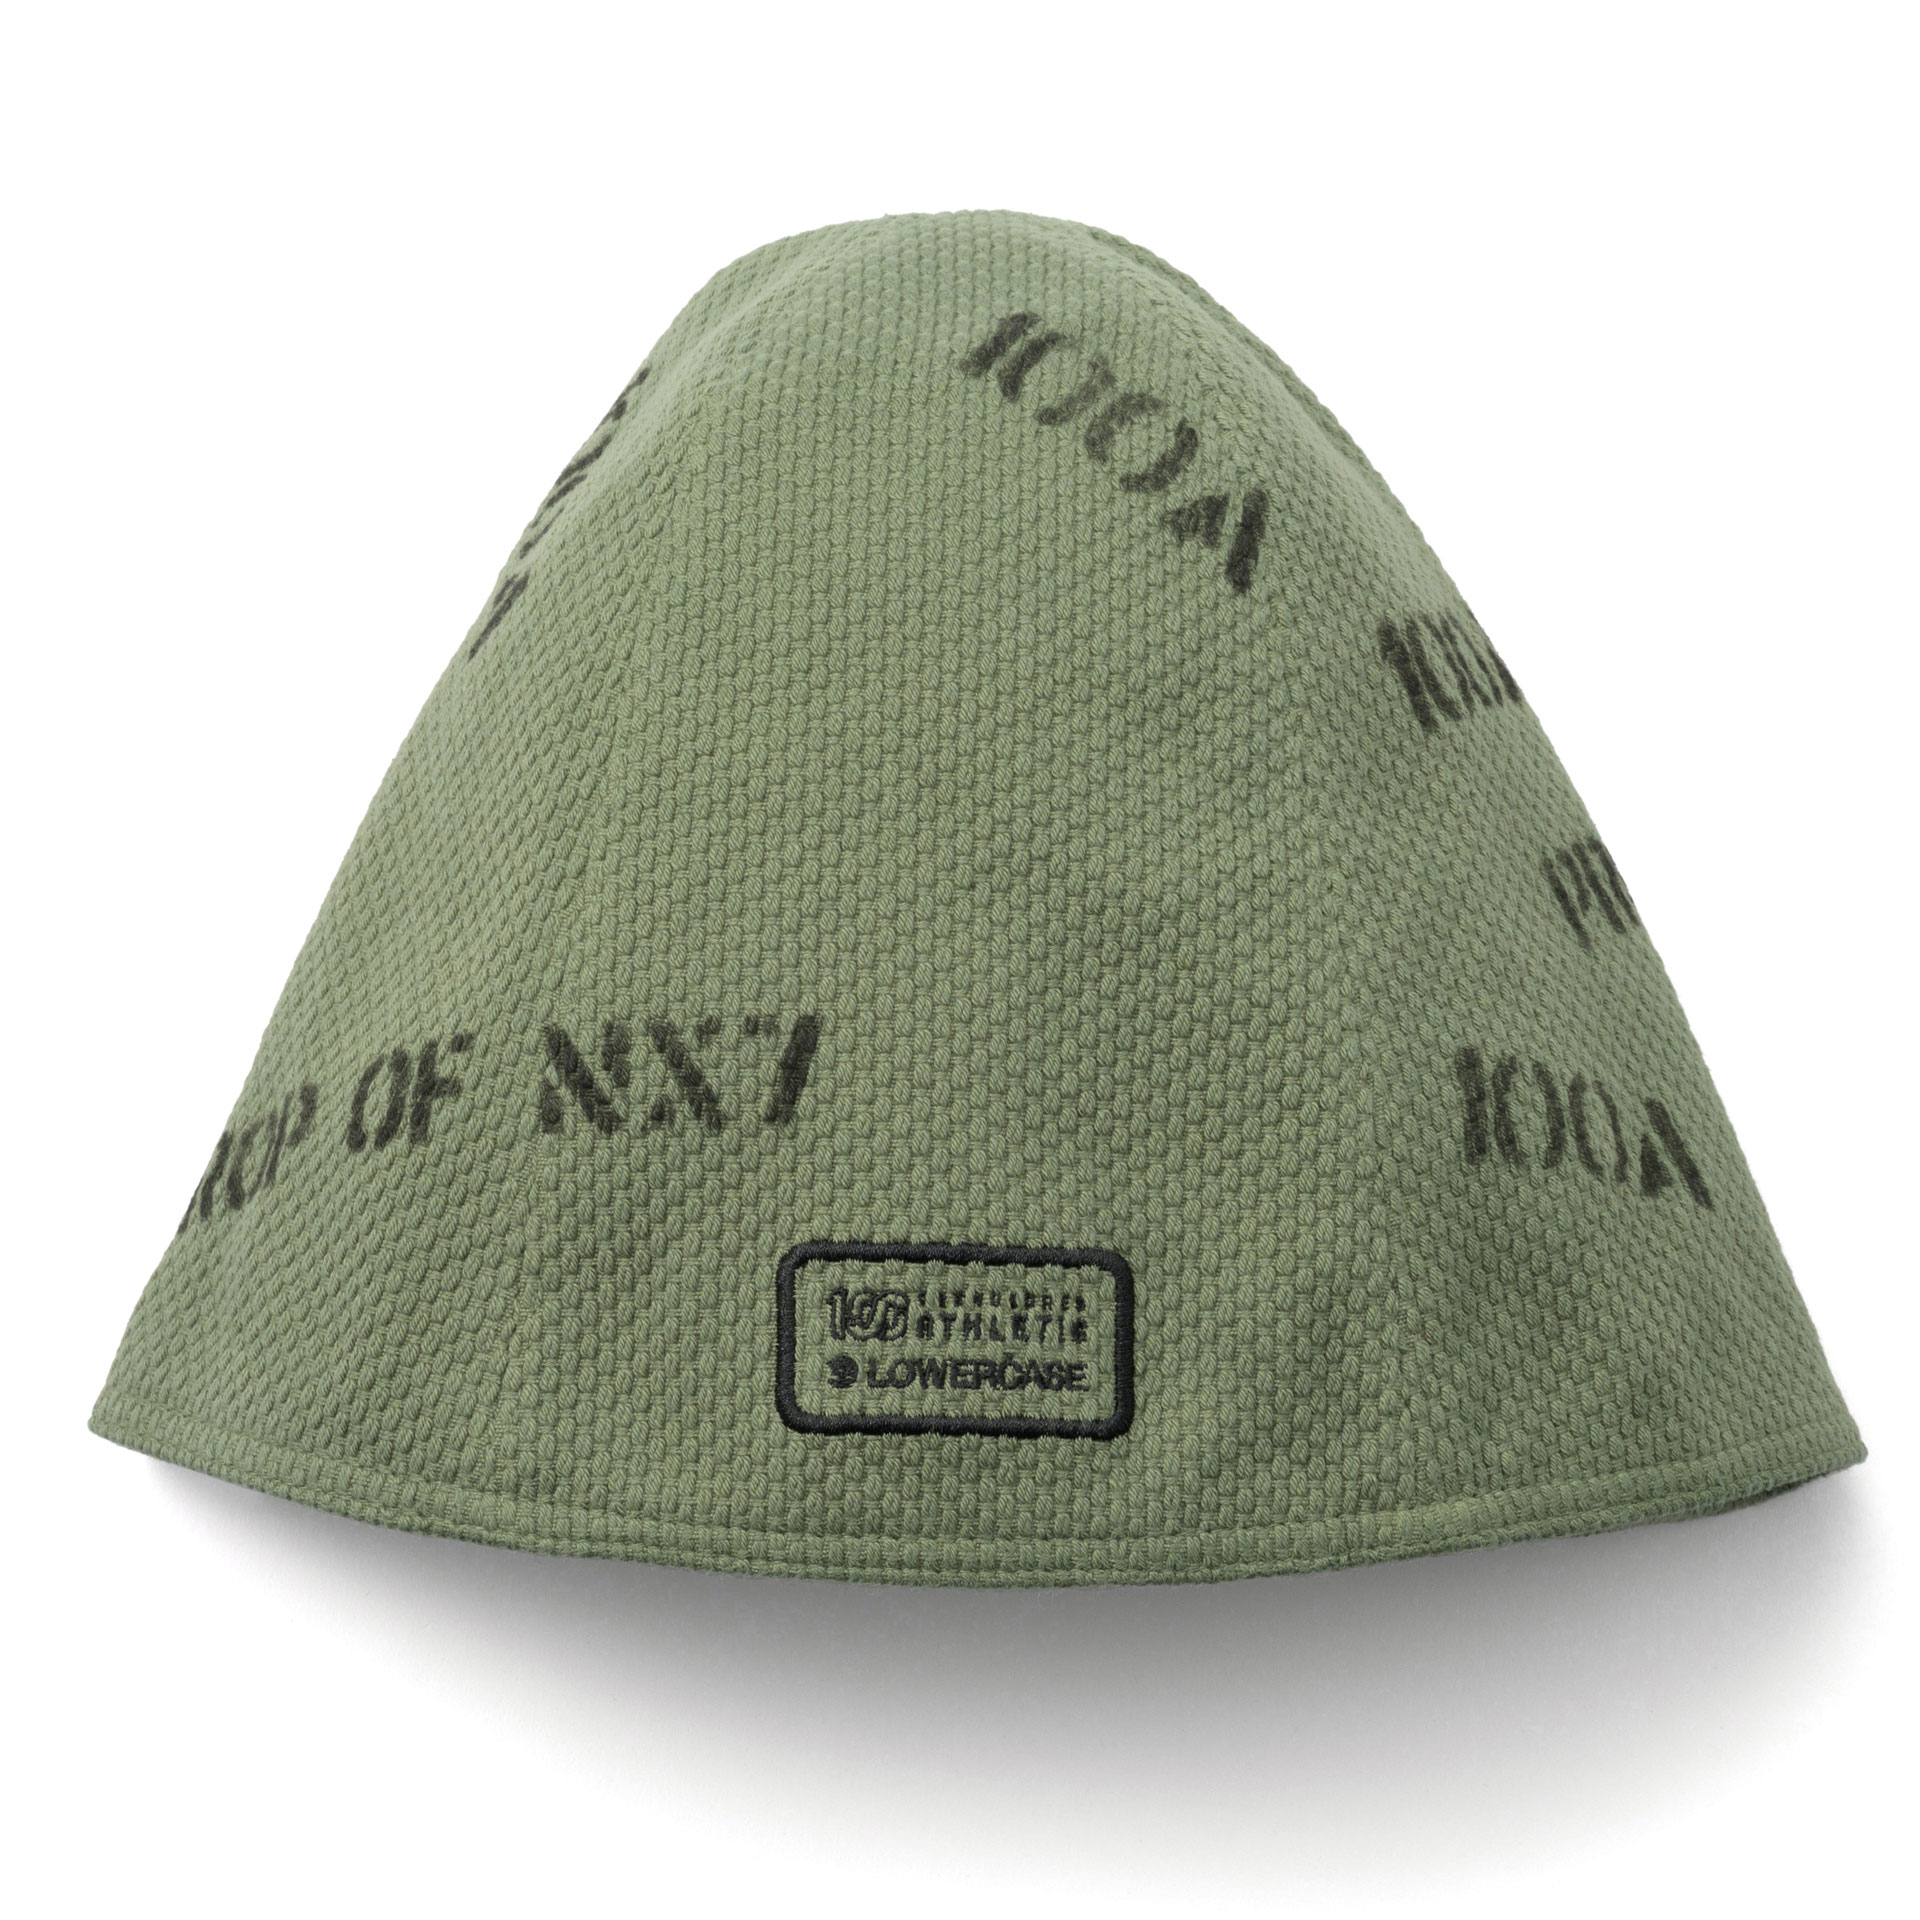 LC x 100A SAUNA HAT *Customized by NEXUSVII.